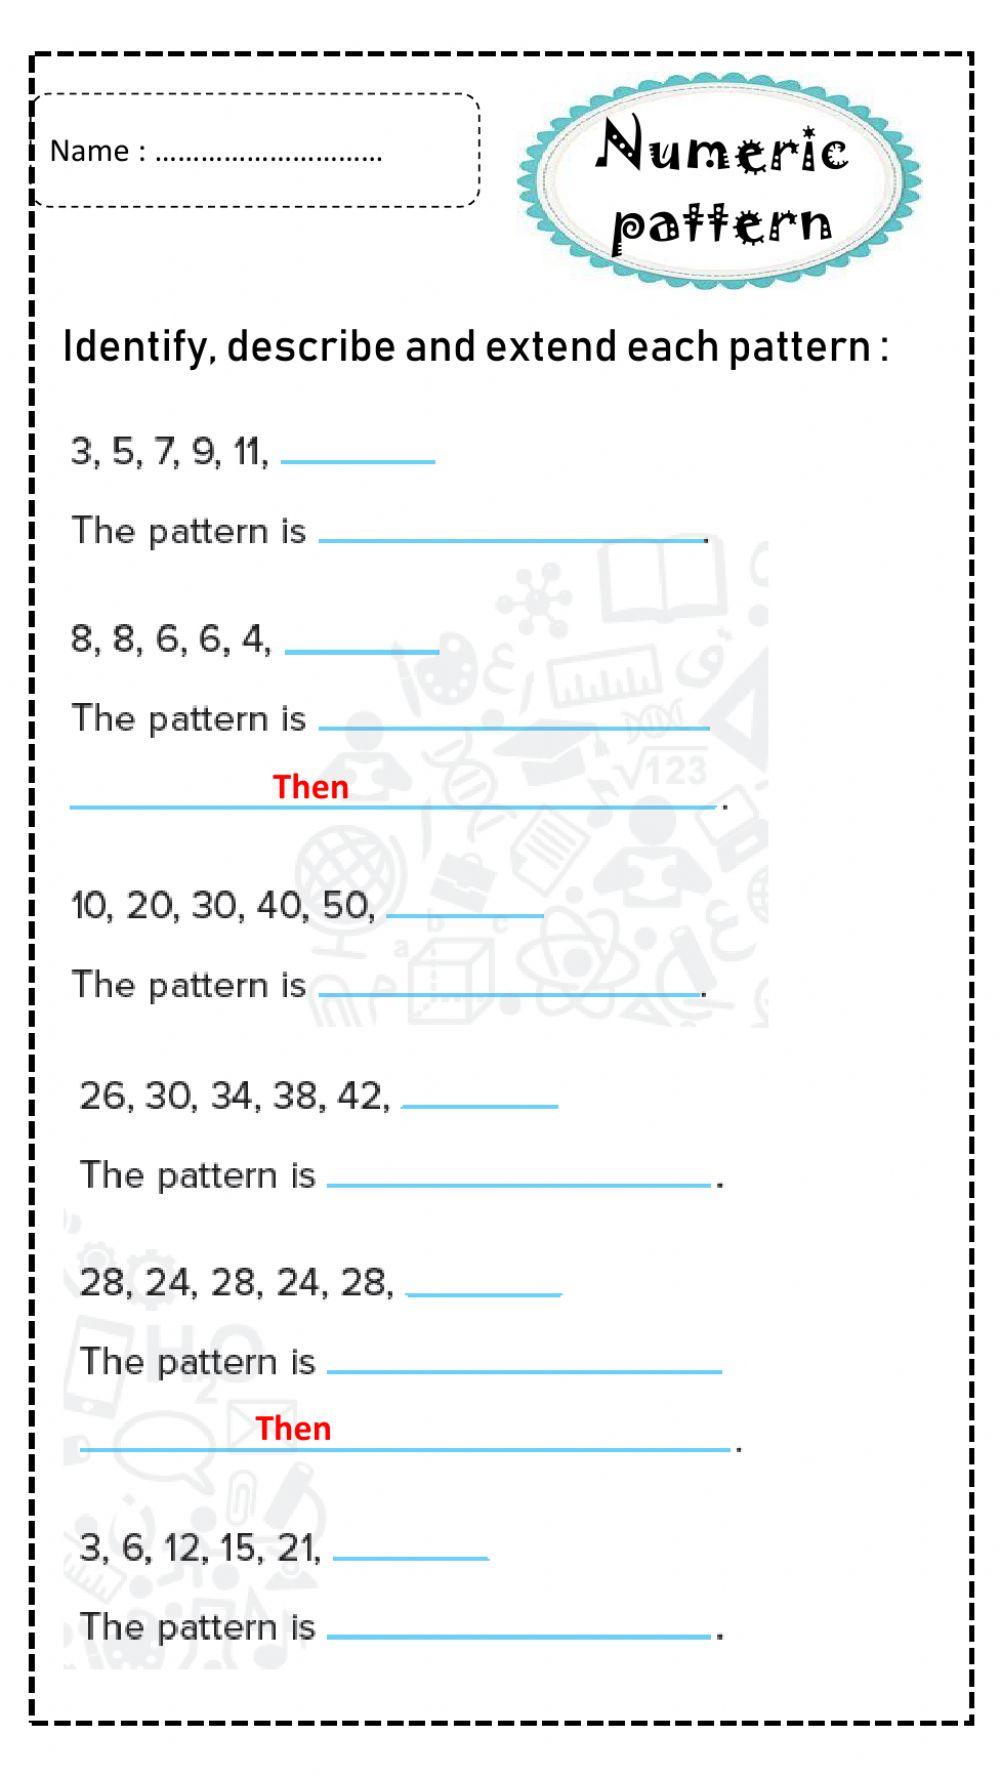 Numeric pattern